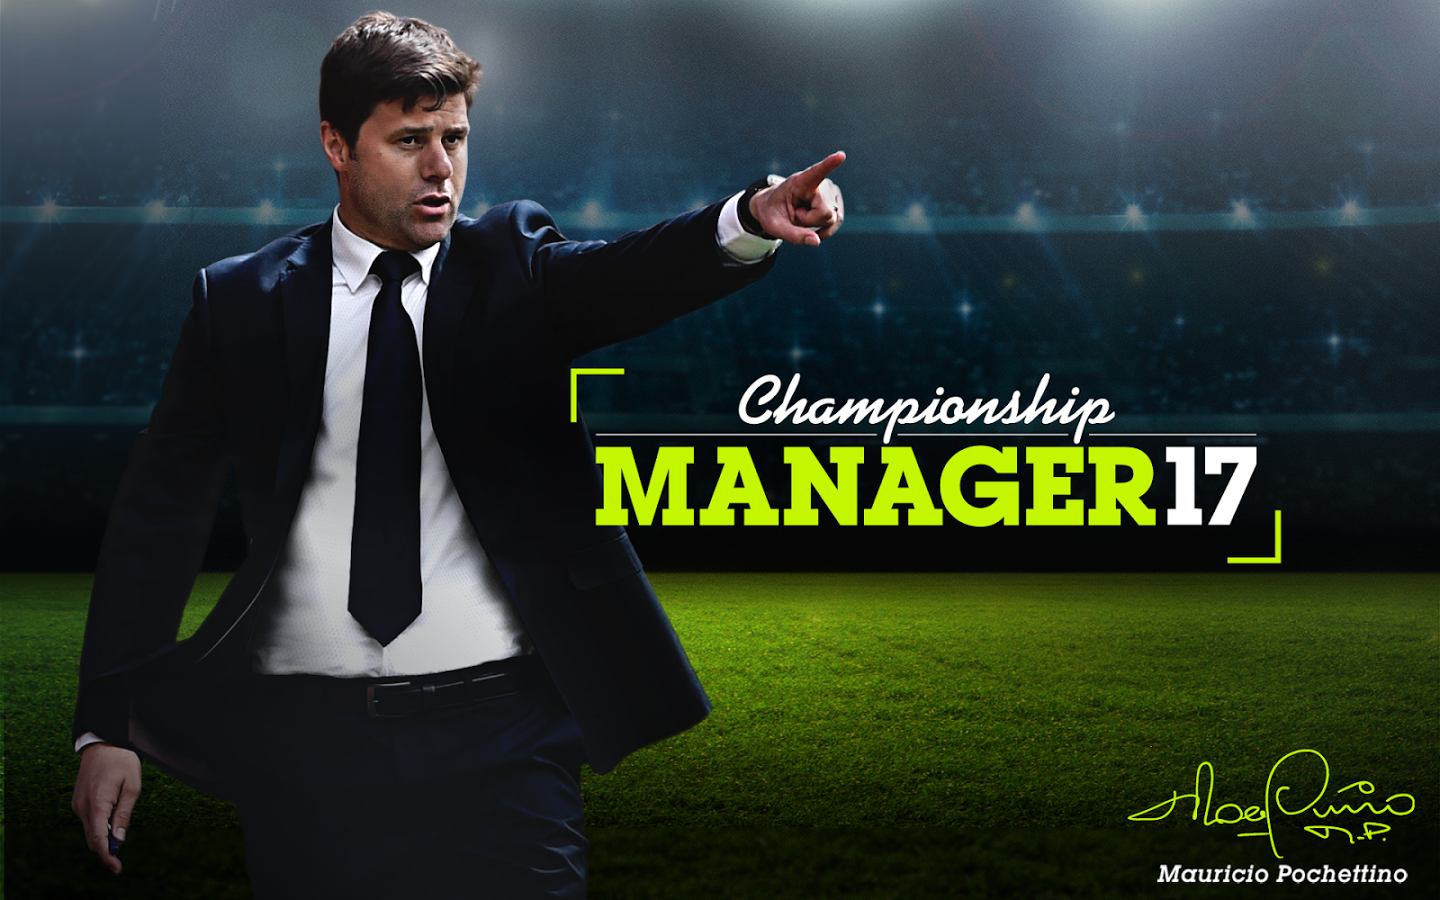 Championship Manager 17 